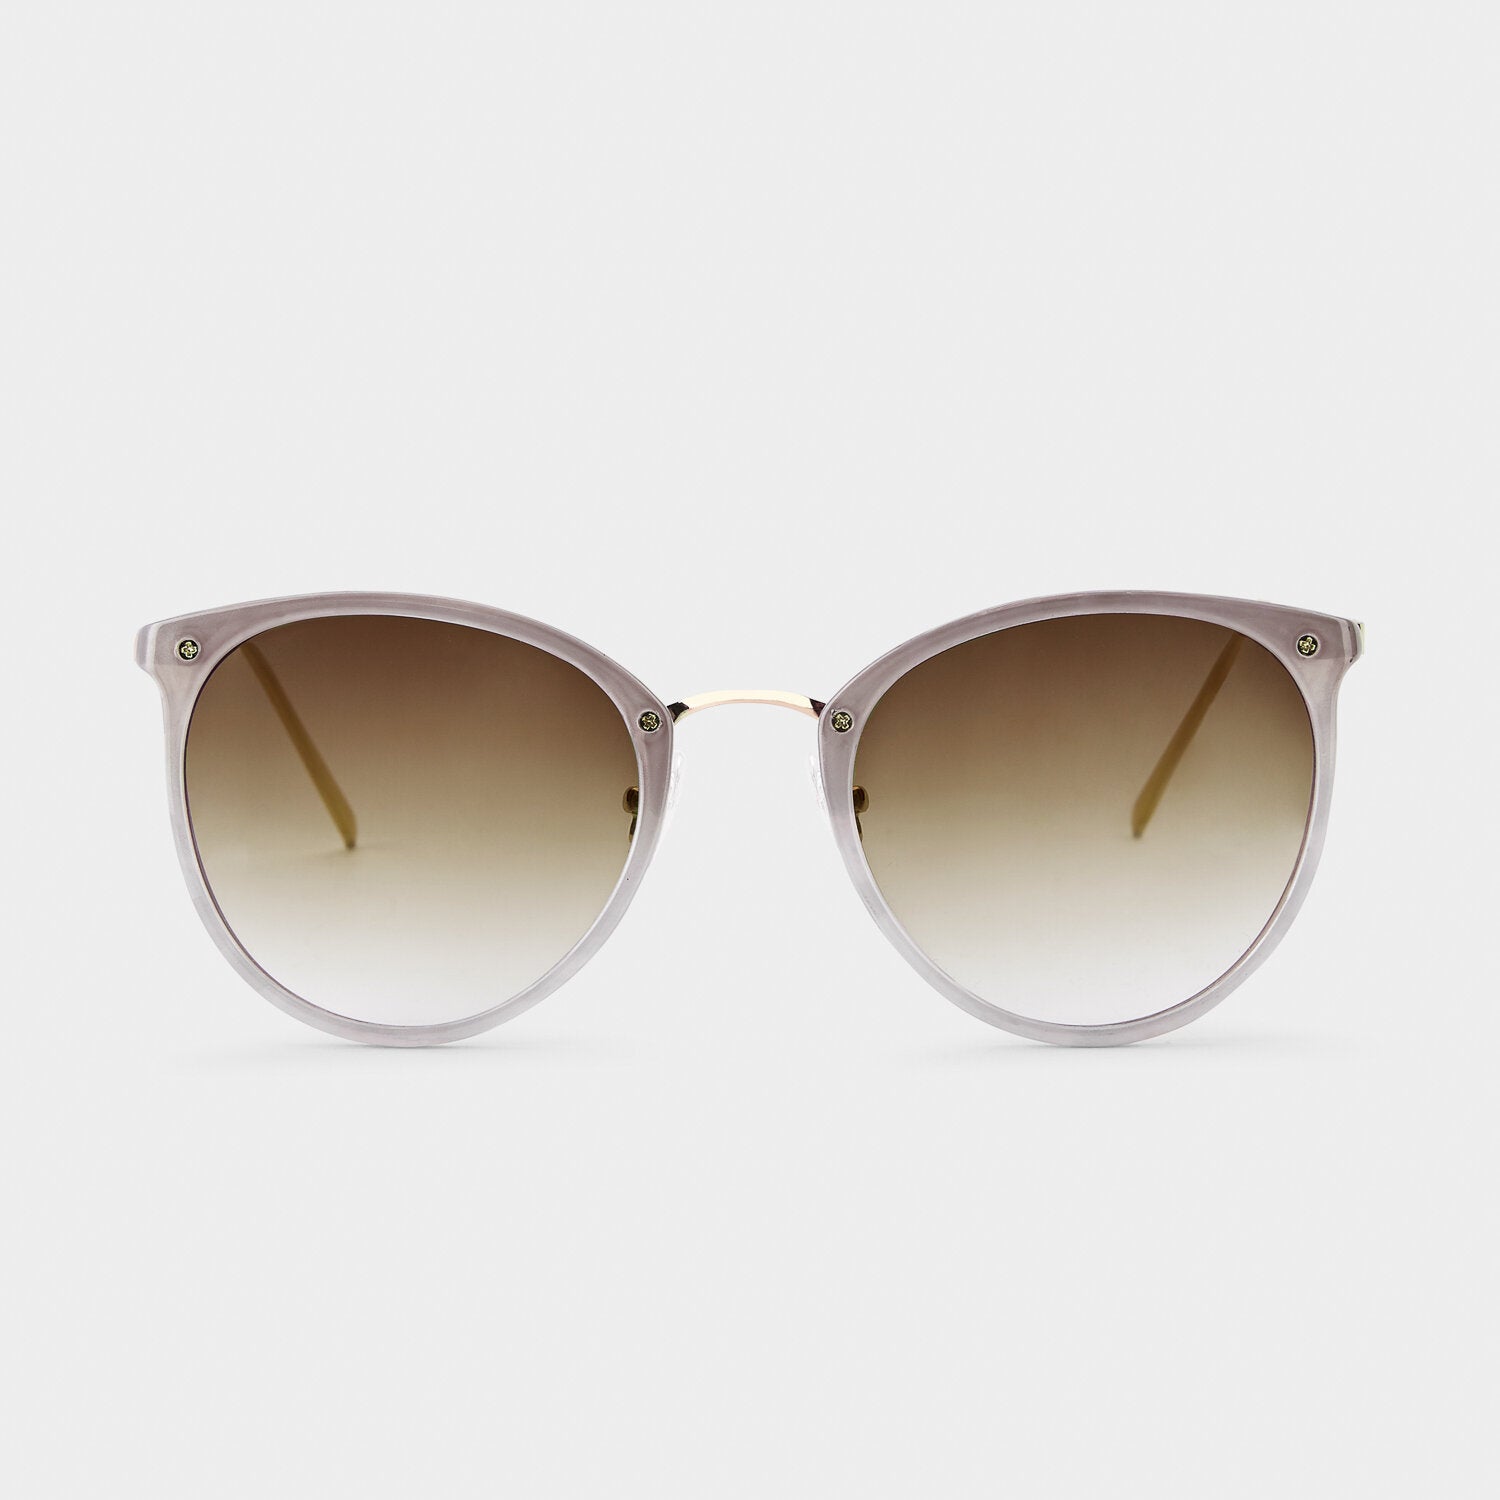 Santorini Sunglasses - Taupe - Katie Loxton